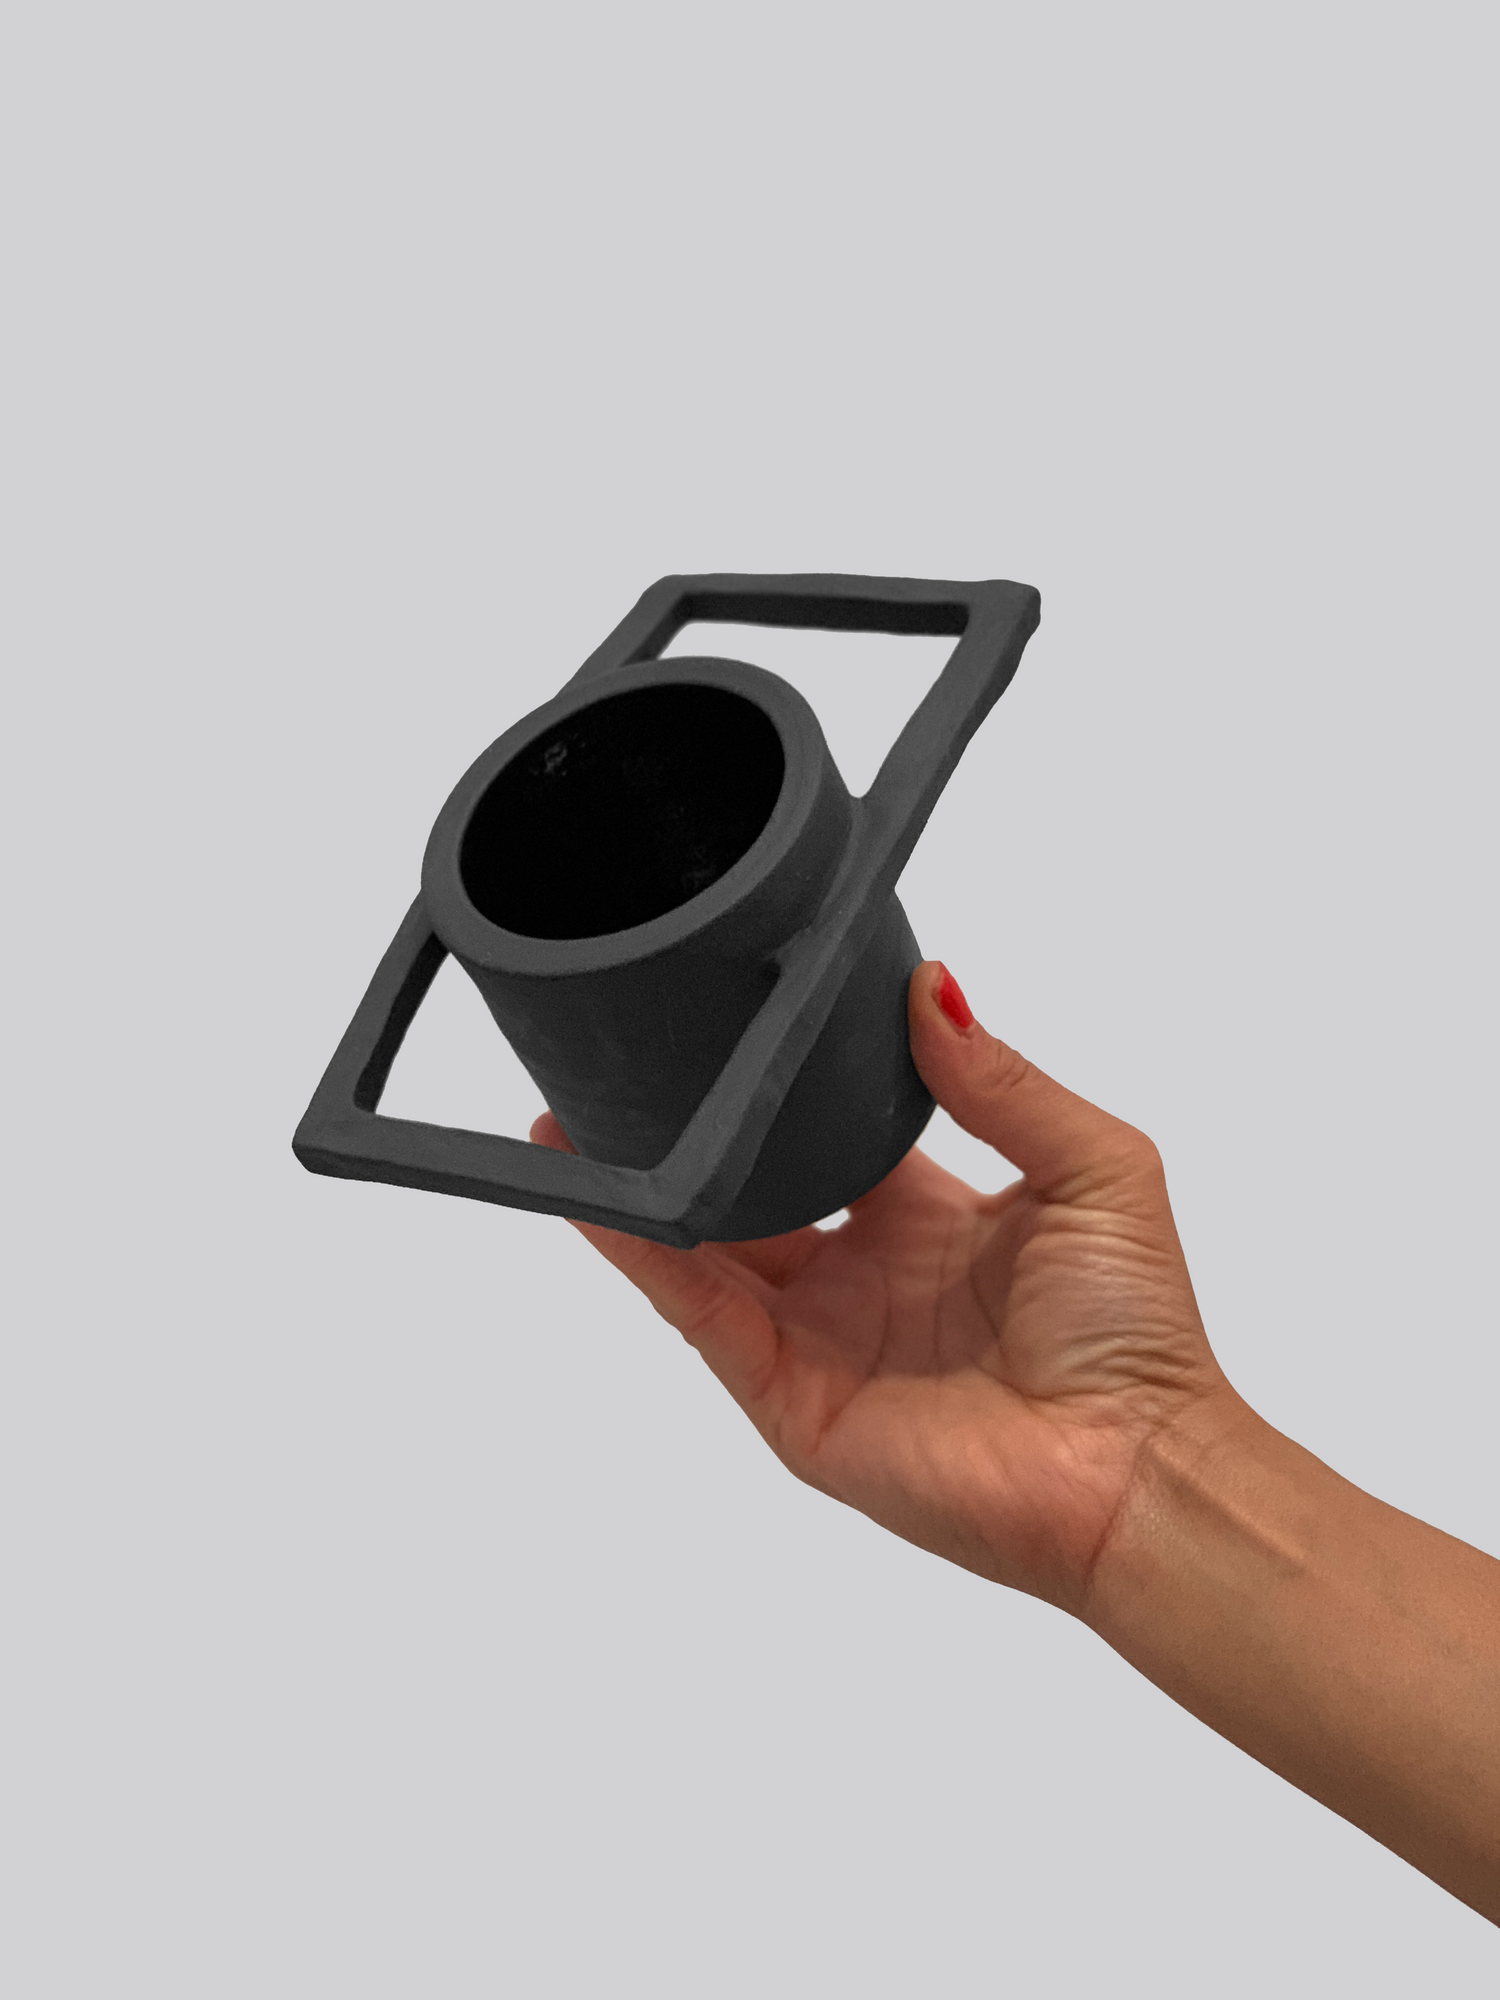 Black matte stoneware ceramic mug with a rectangle frame around the top of the mug as the handle.